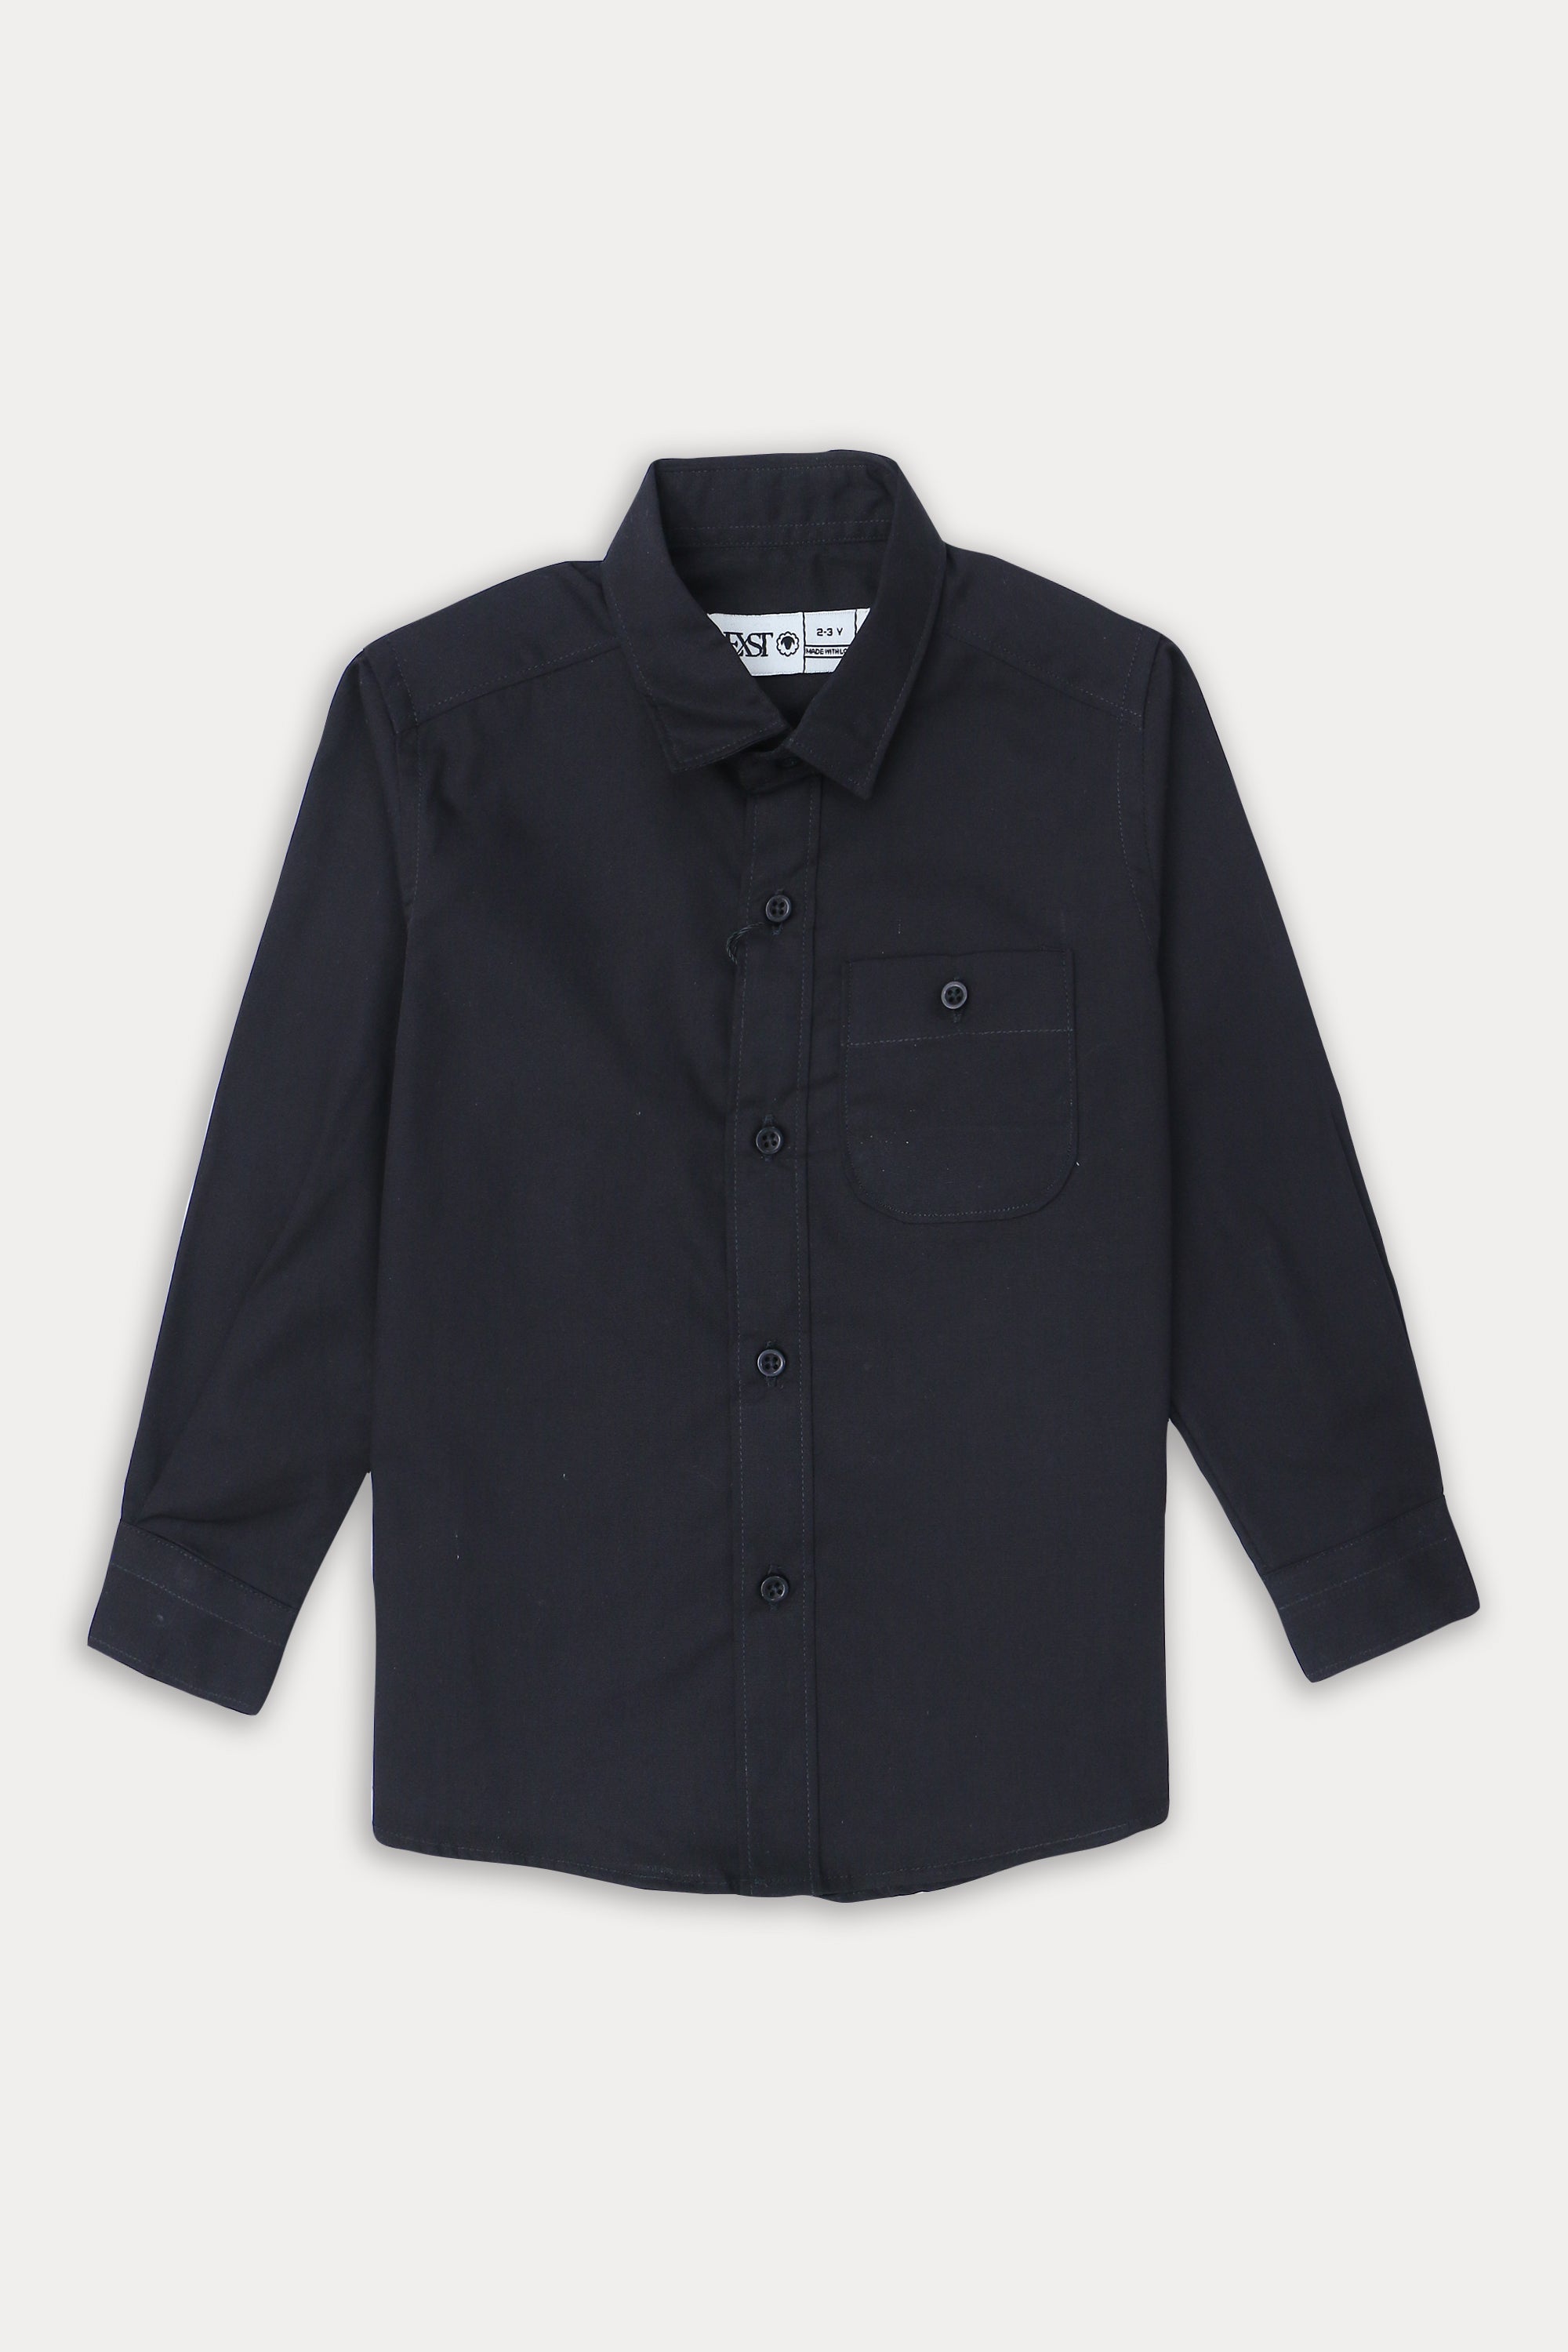 Boys Band Collar Casual Shirt Bs23-19 Black– Expostorepk